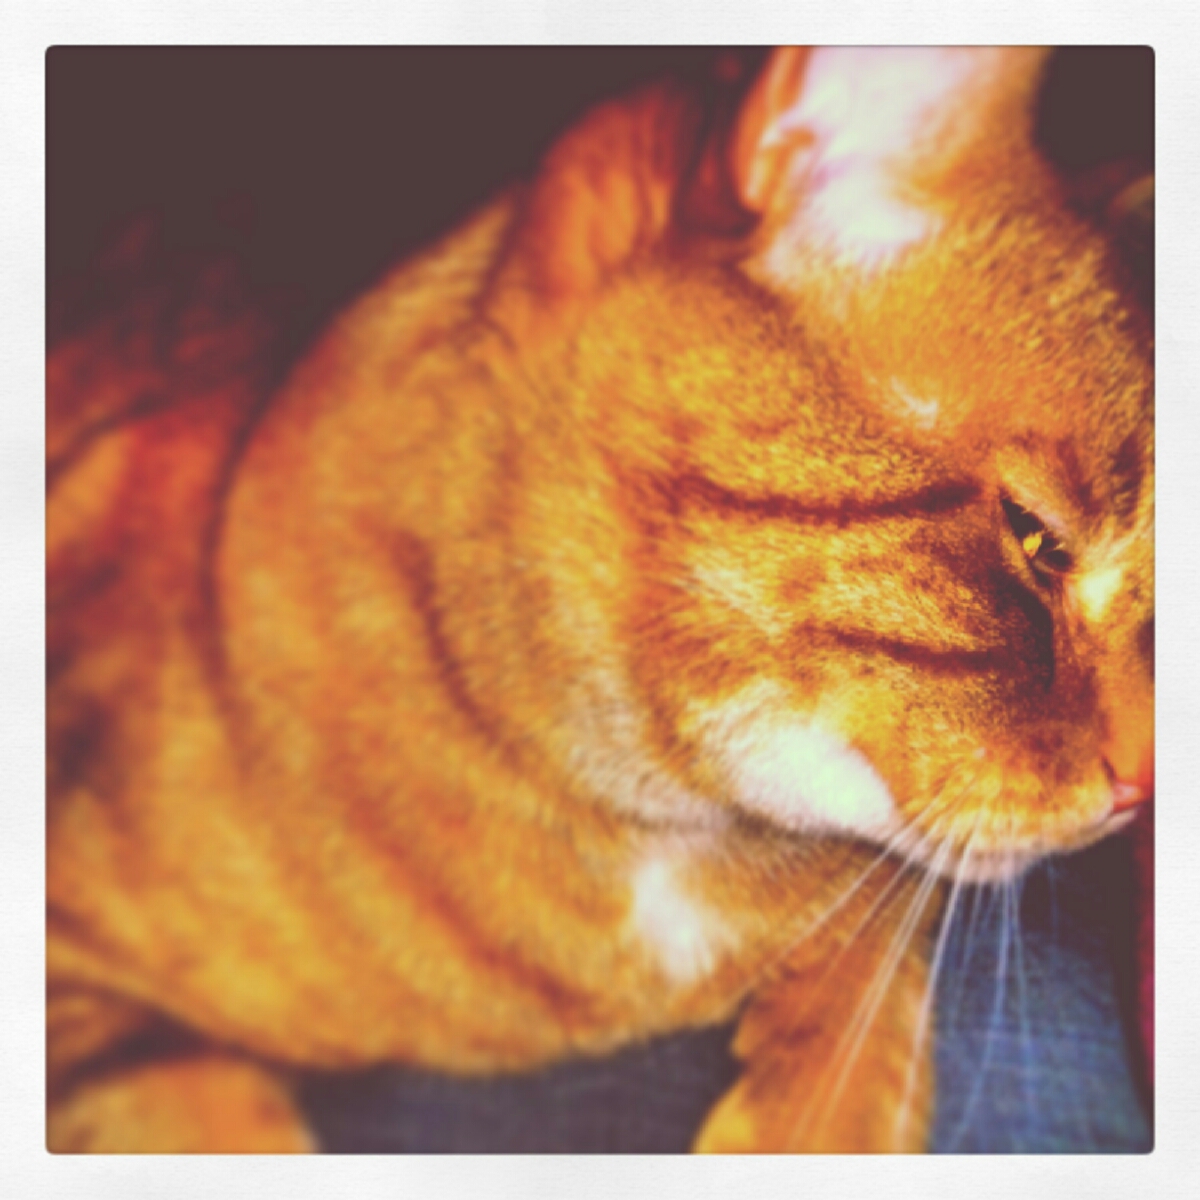 A close up of a ginger cat, Boyo.